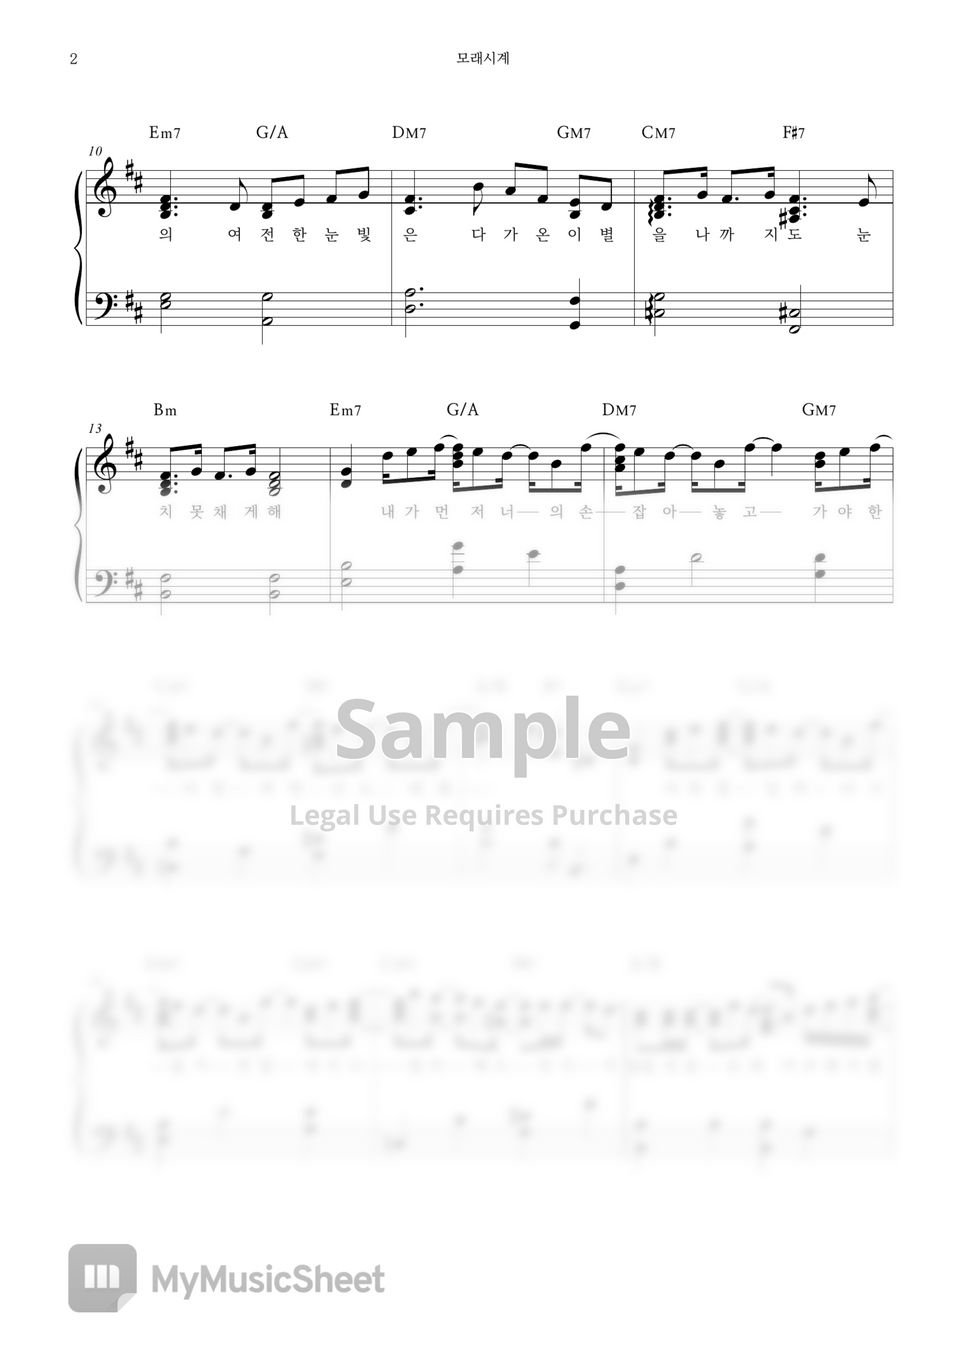 Wanna One 'Hourglass' Piano Sheet Music